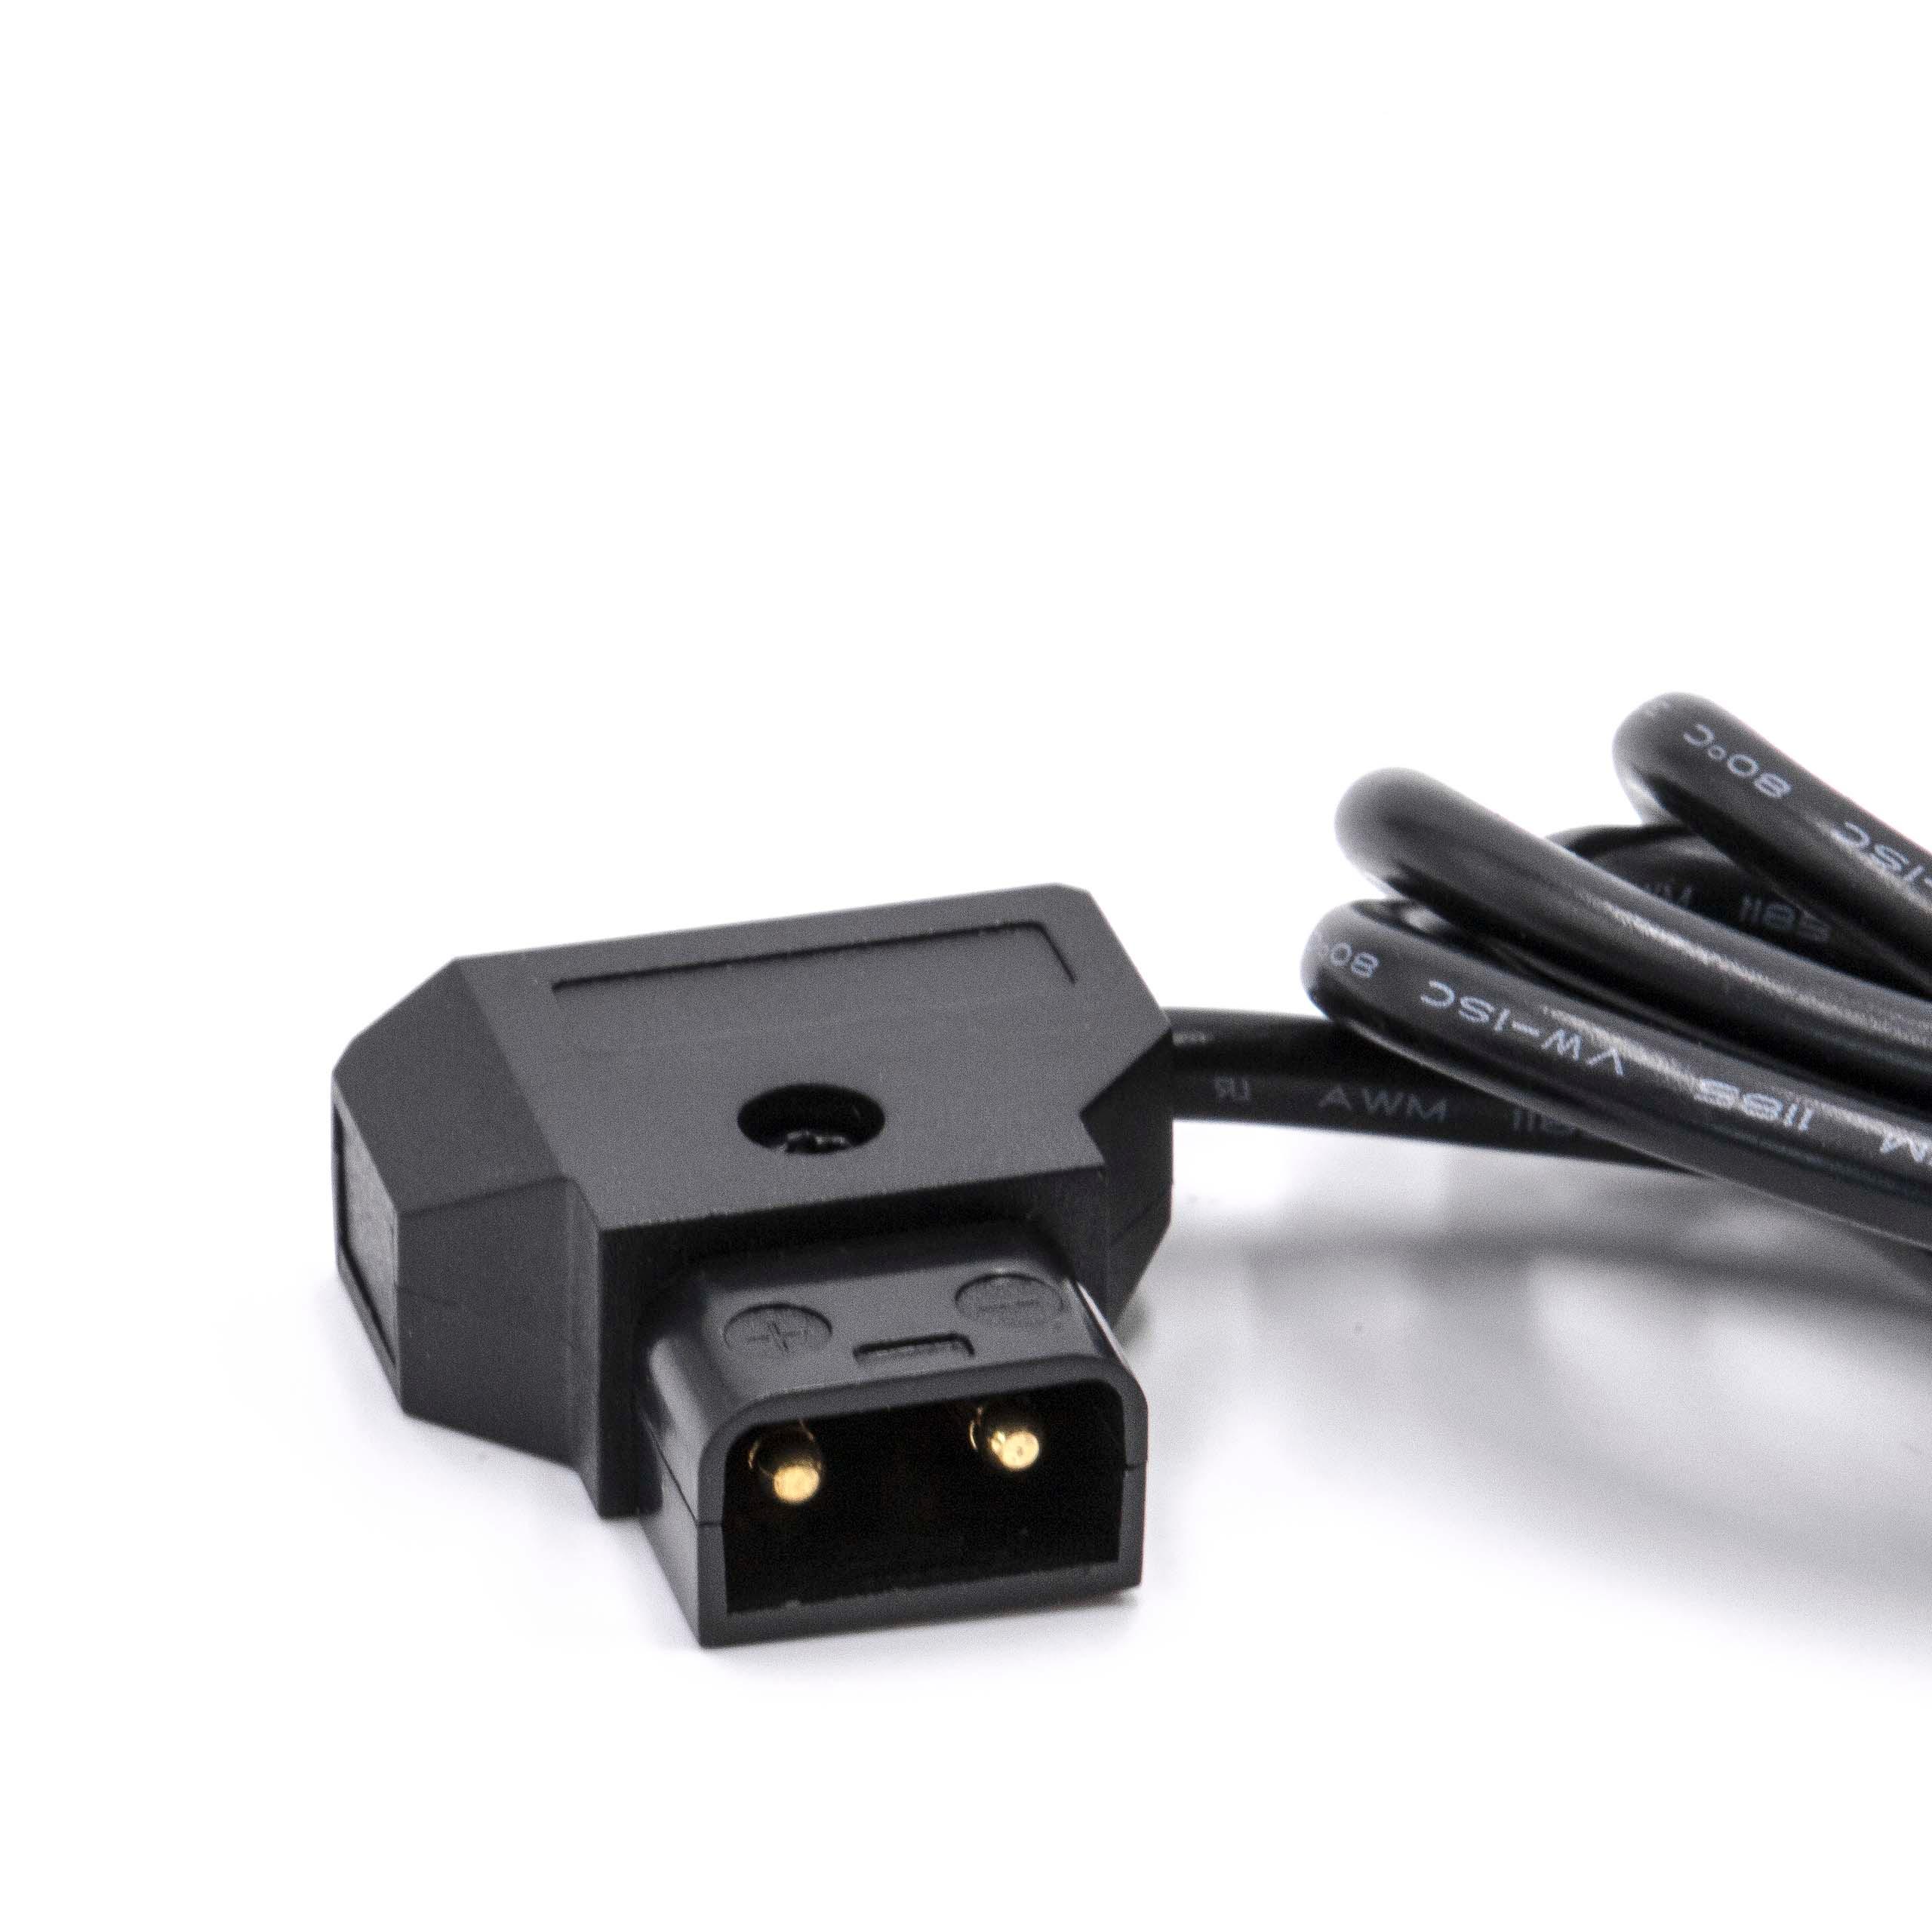 Cable adaptador D-Tap (m) a fuente alimentación LED para cámara Anton Bauer D-Tap, Dionic - 1 m negro